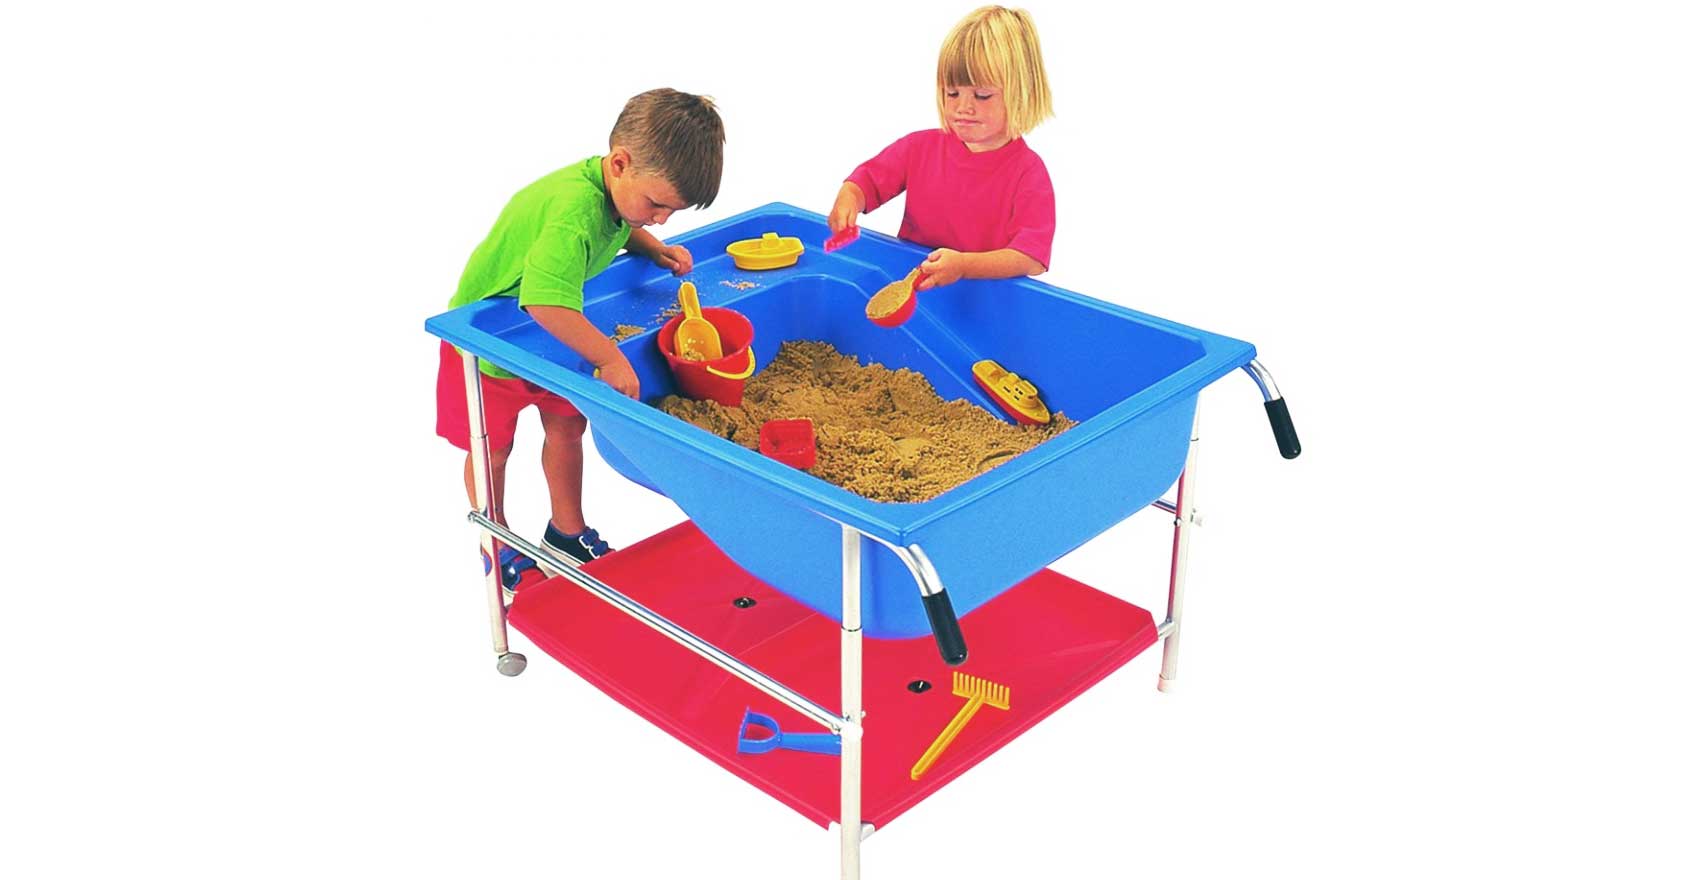 Nursery sand and water play